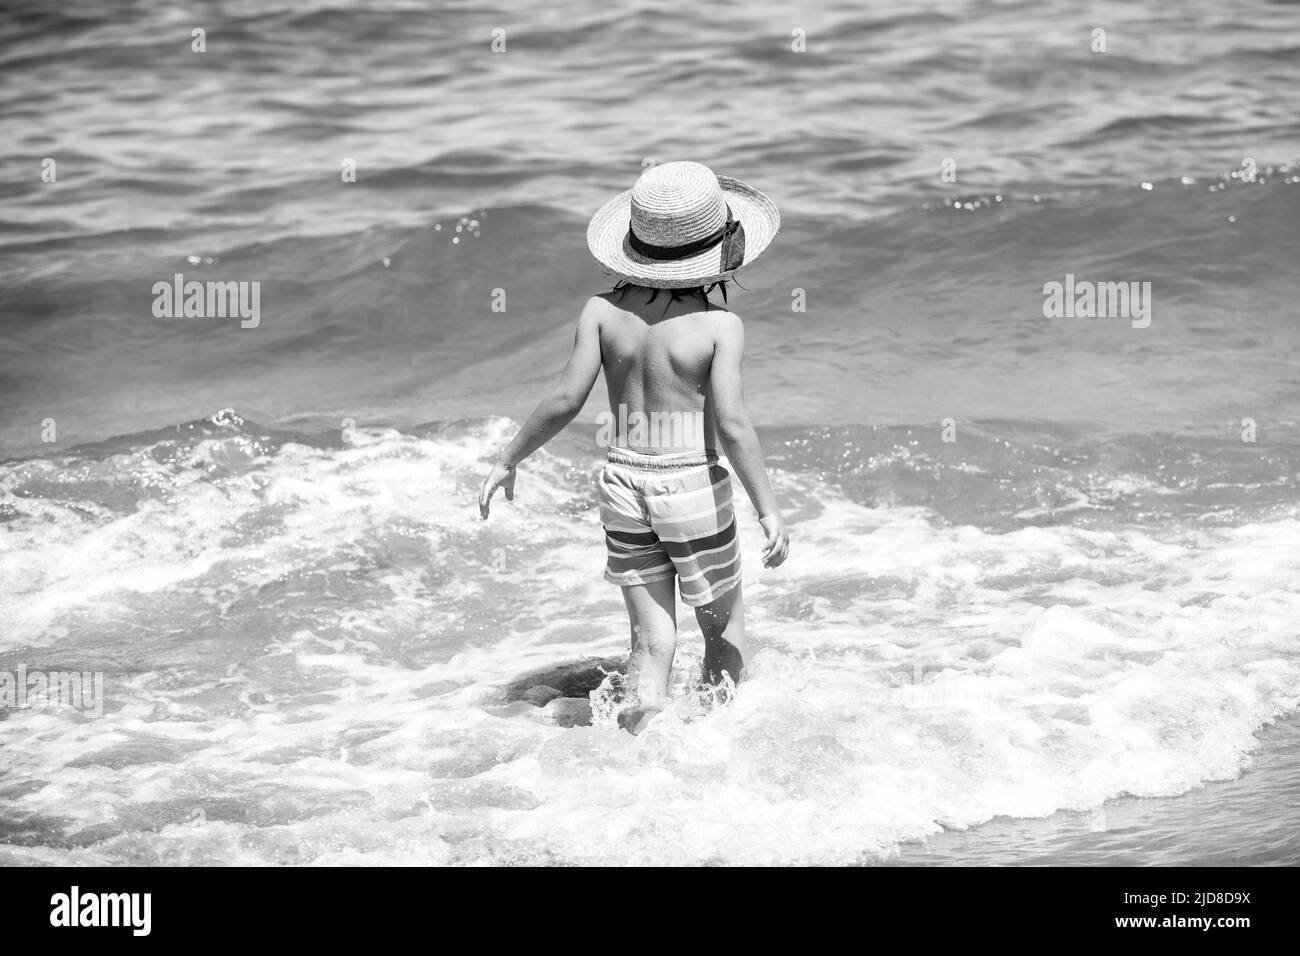 Kid seaside Black and White Stock Photos & Images - Alamy